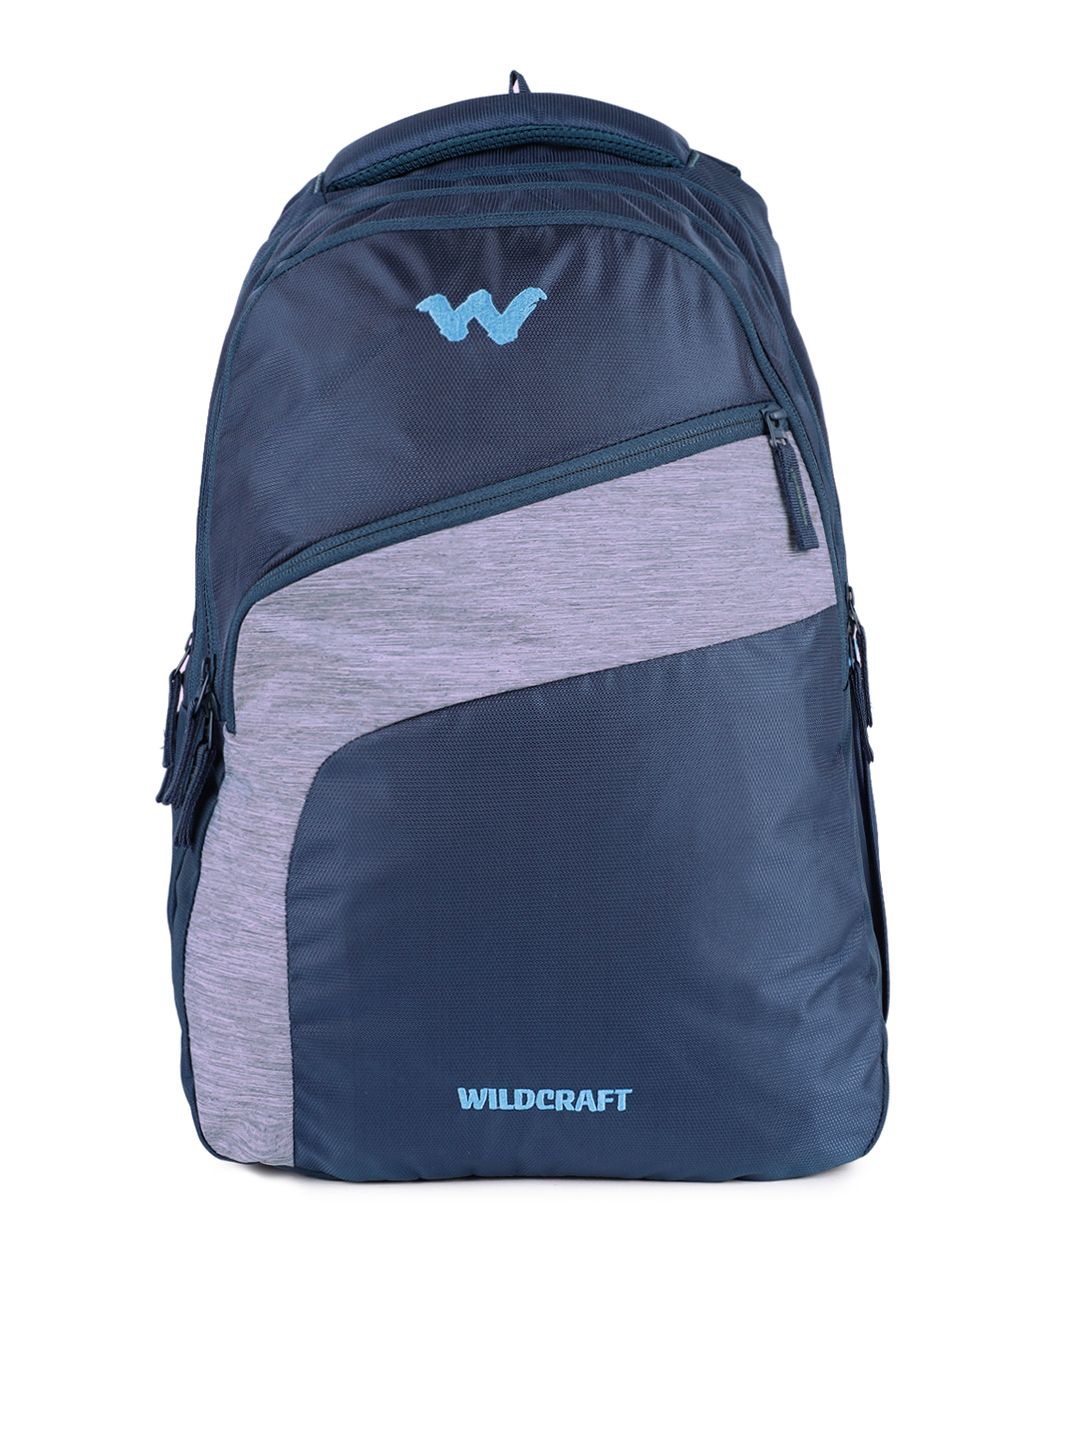 Wildcraft Unisex Blue & Grey Colourblocked Virtuso XL Backpack Price in India